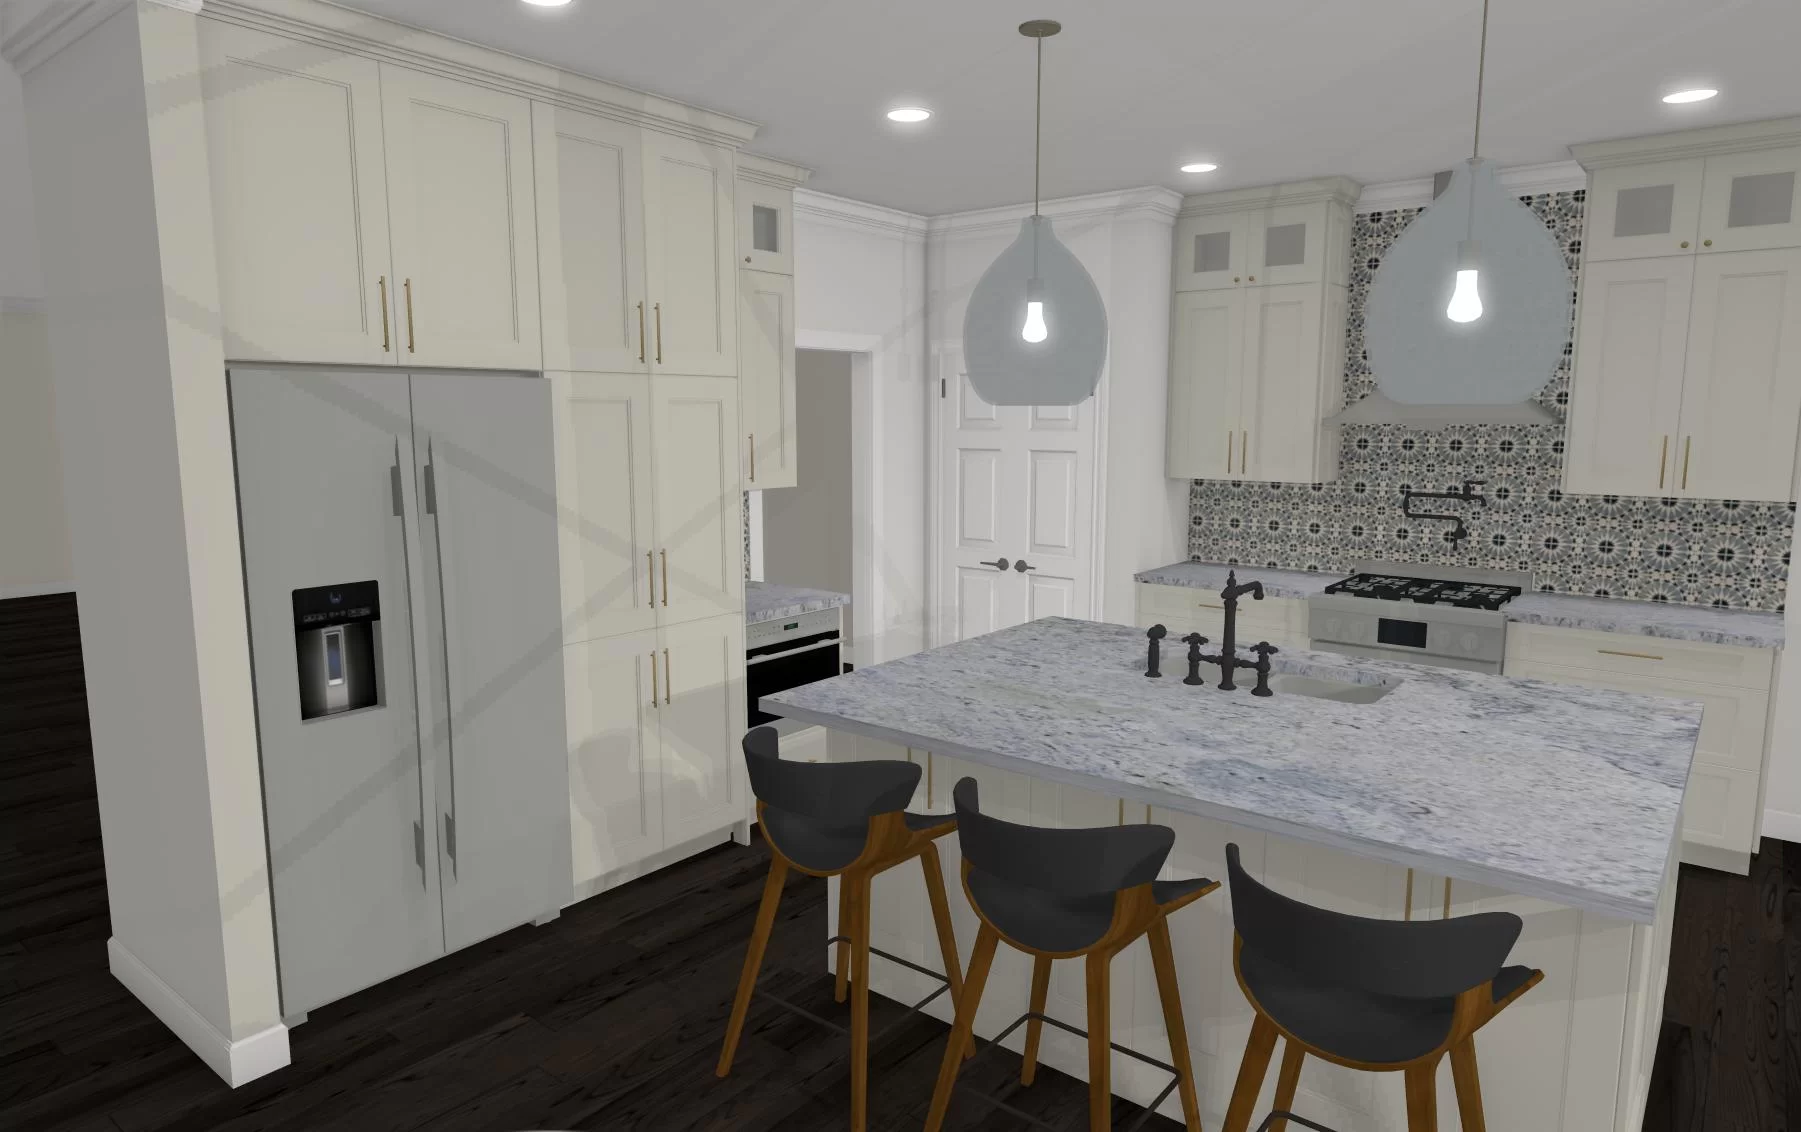 3D Raleigh Kitchen remodel by Riverbirch